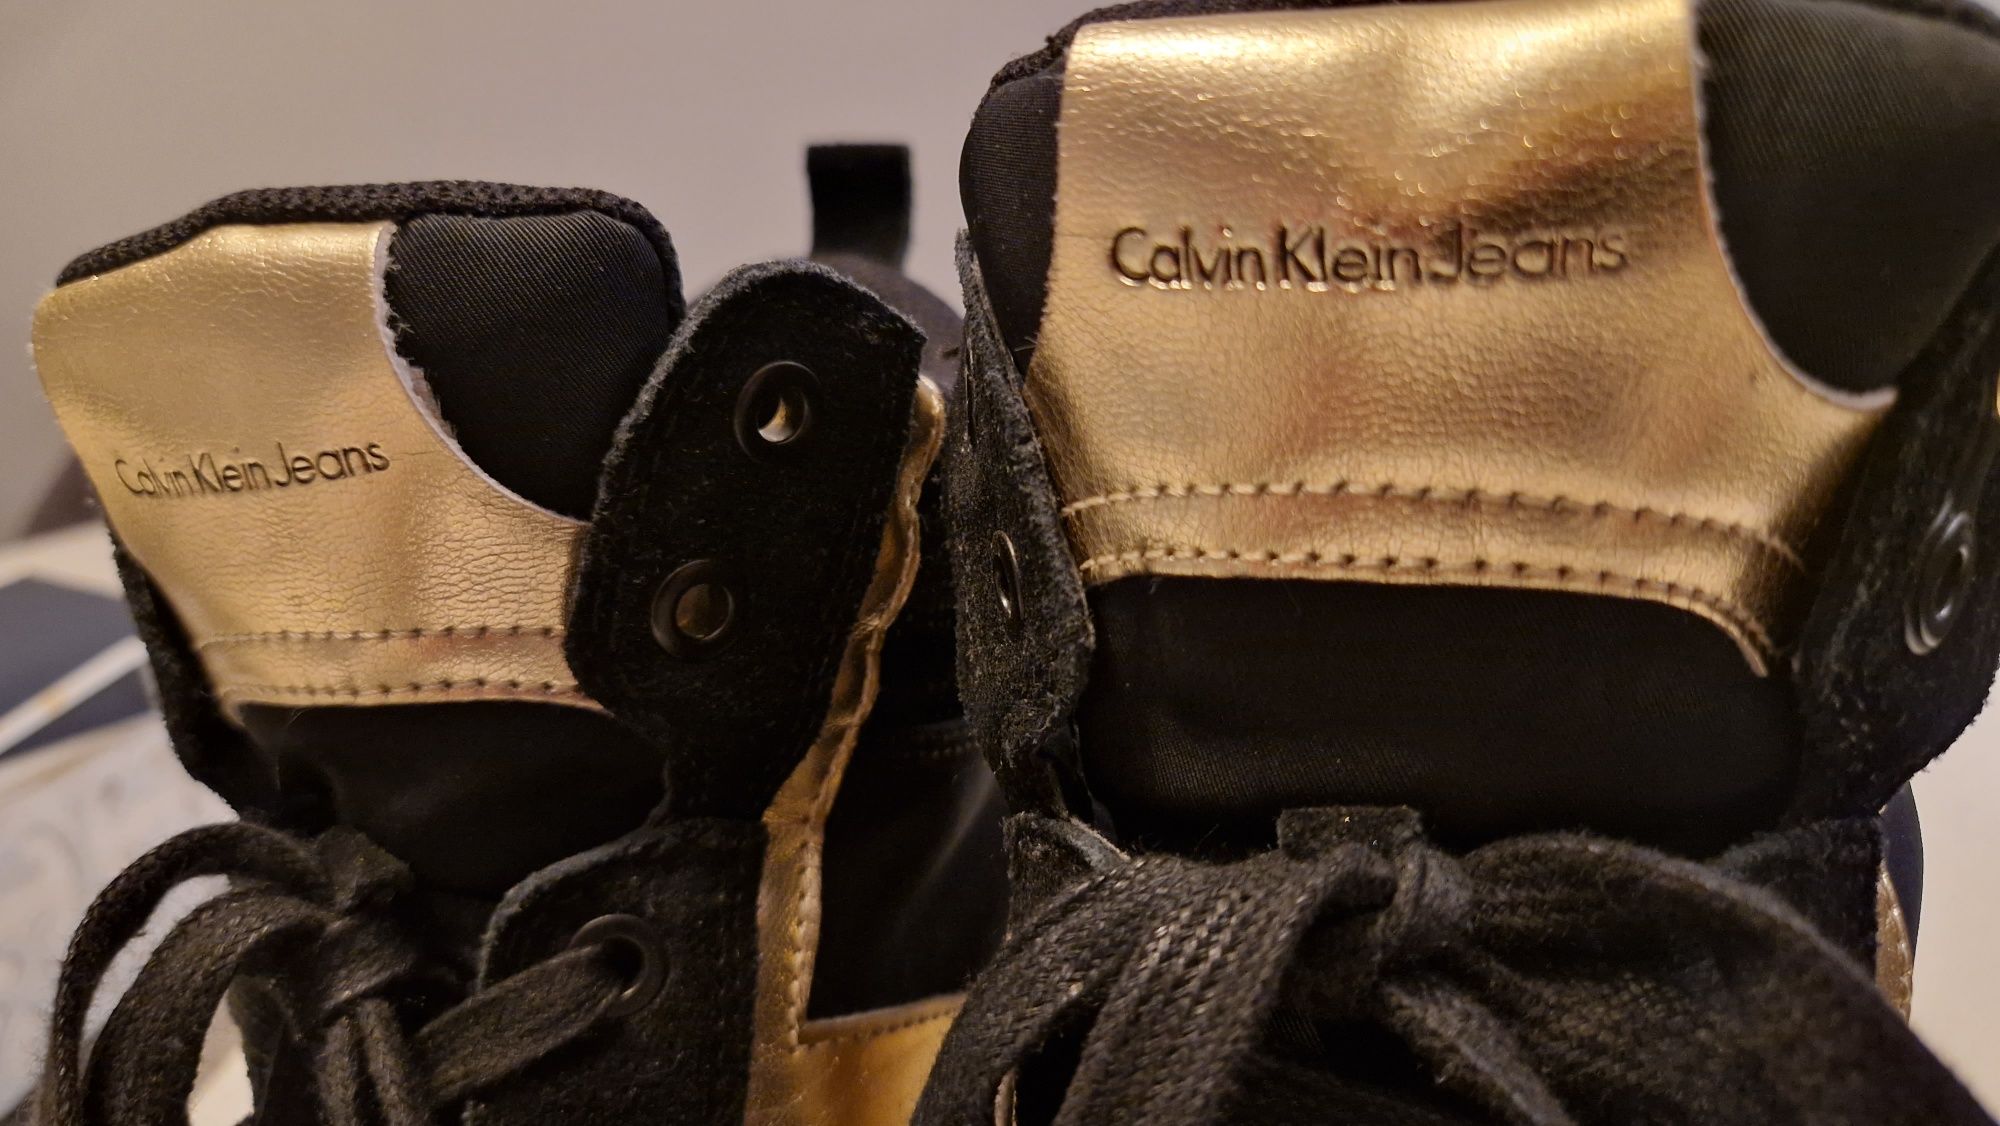 Buty Calvin Klein Beth czarno zlote sneakersy na koturnie 41